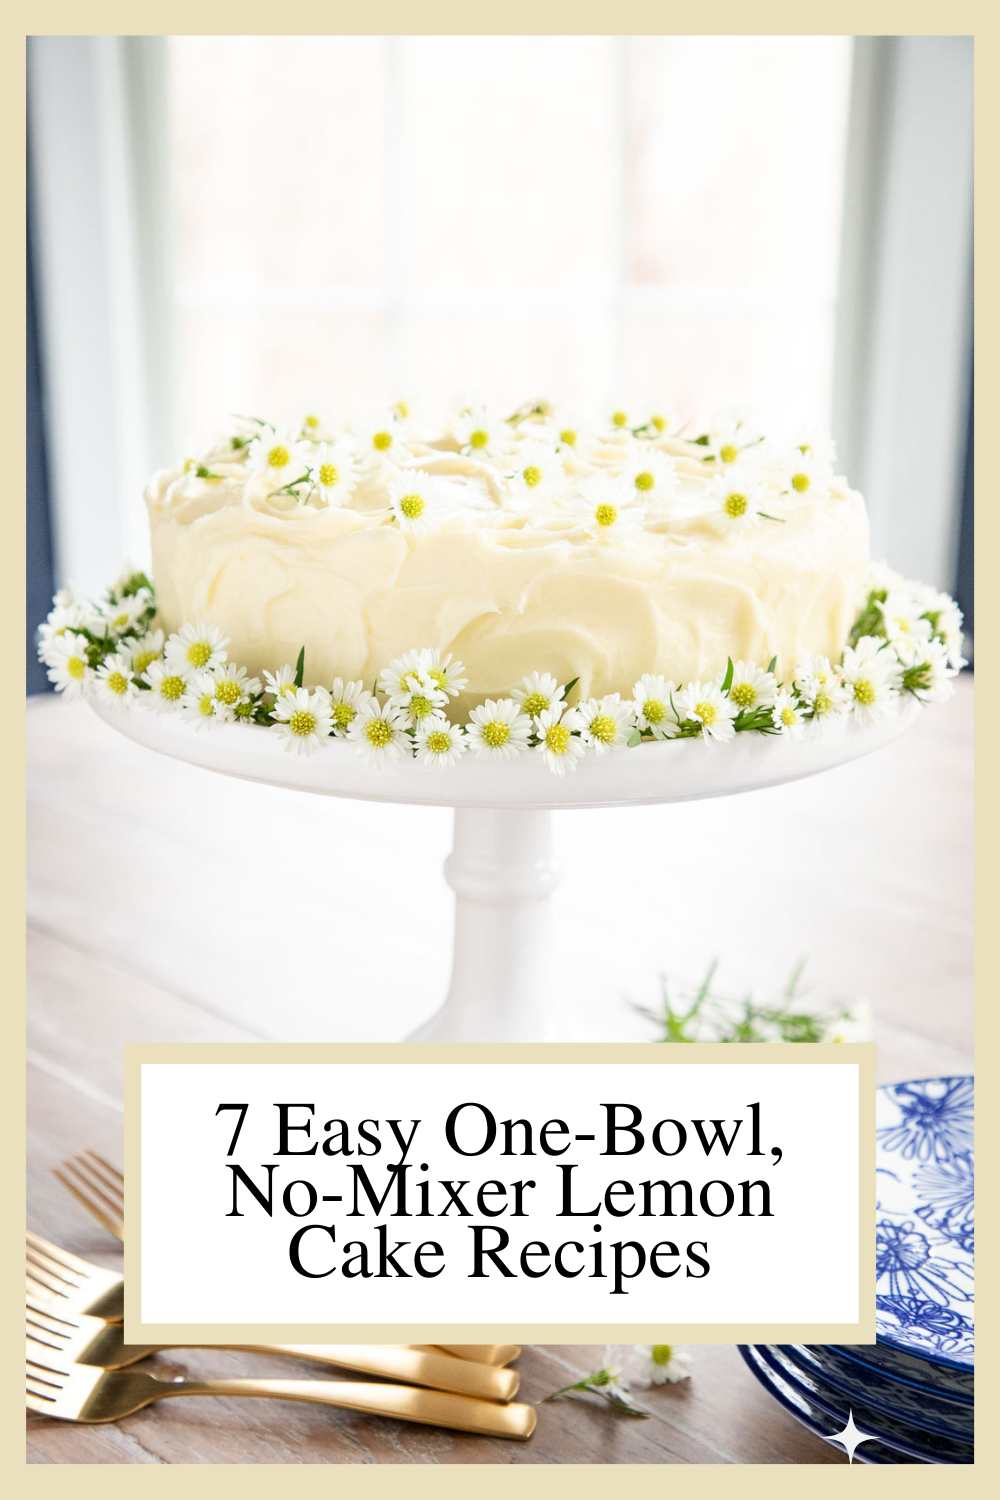 Life Giving You Lemons? 7 Easy One-Bowl Lemon Cake Recipes to Sweeten Things Up!